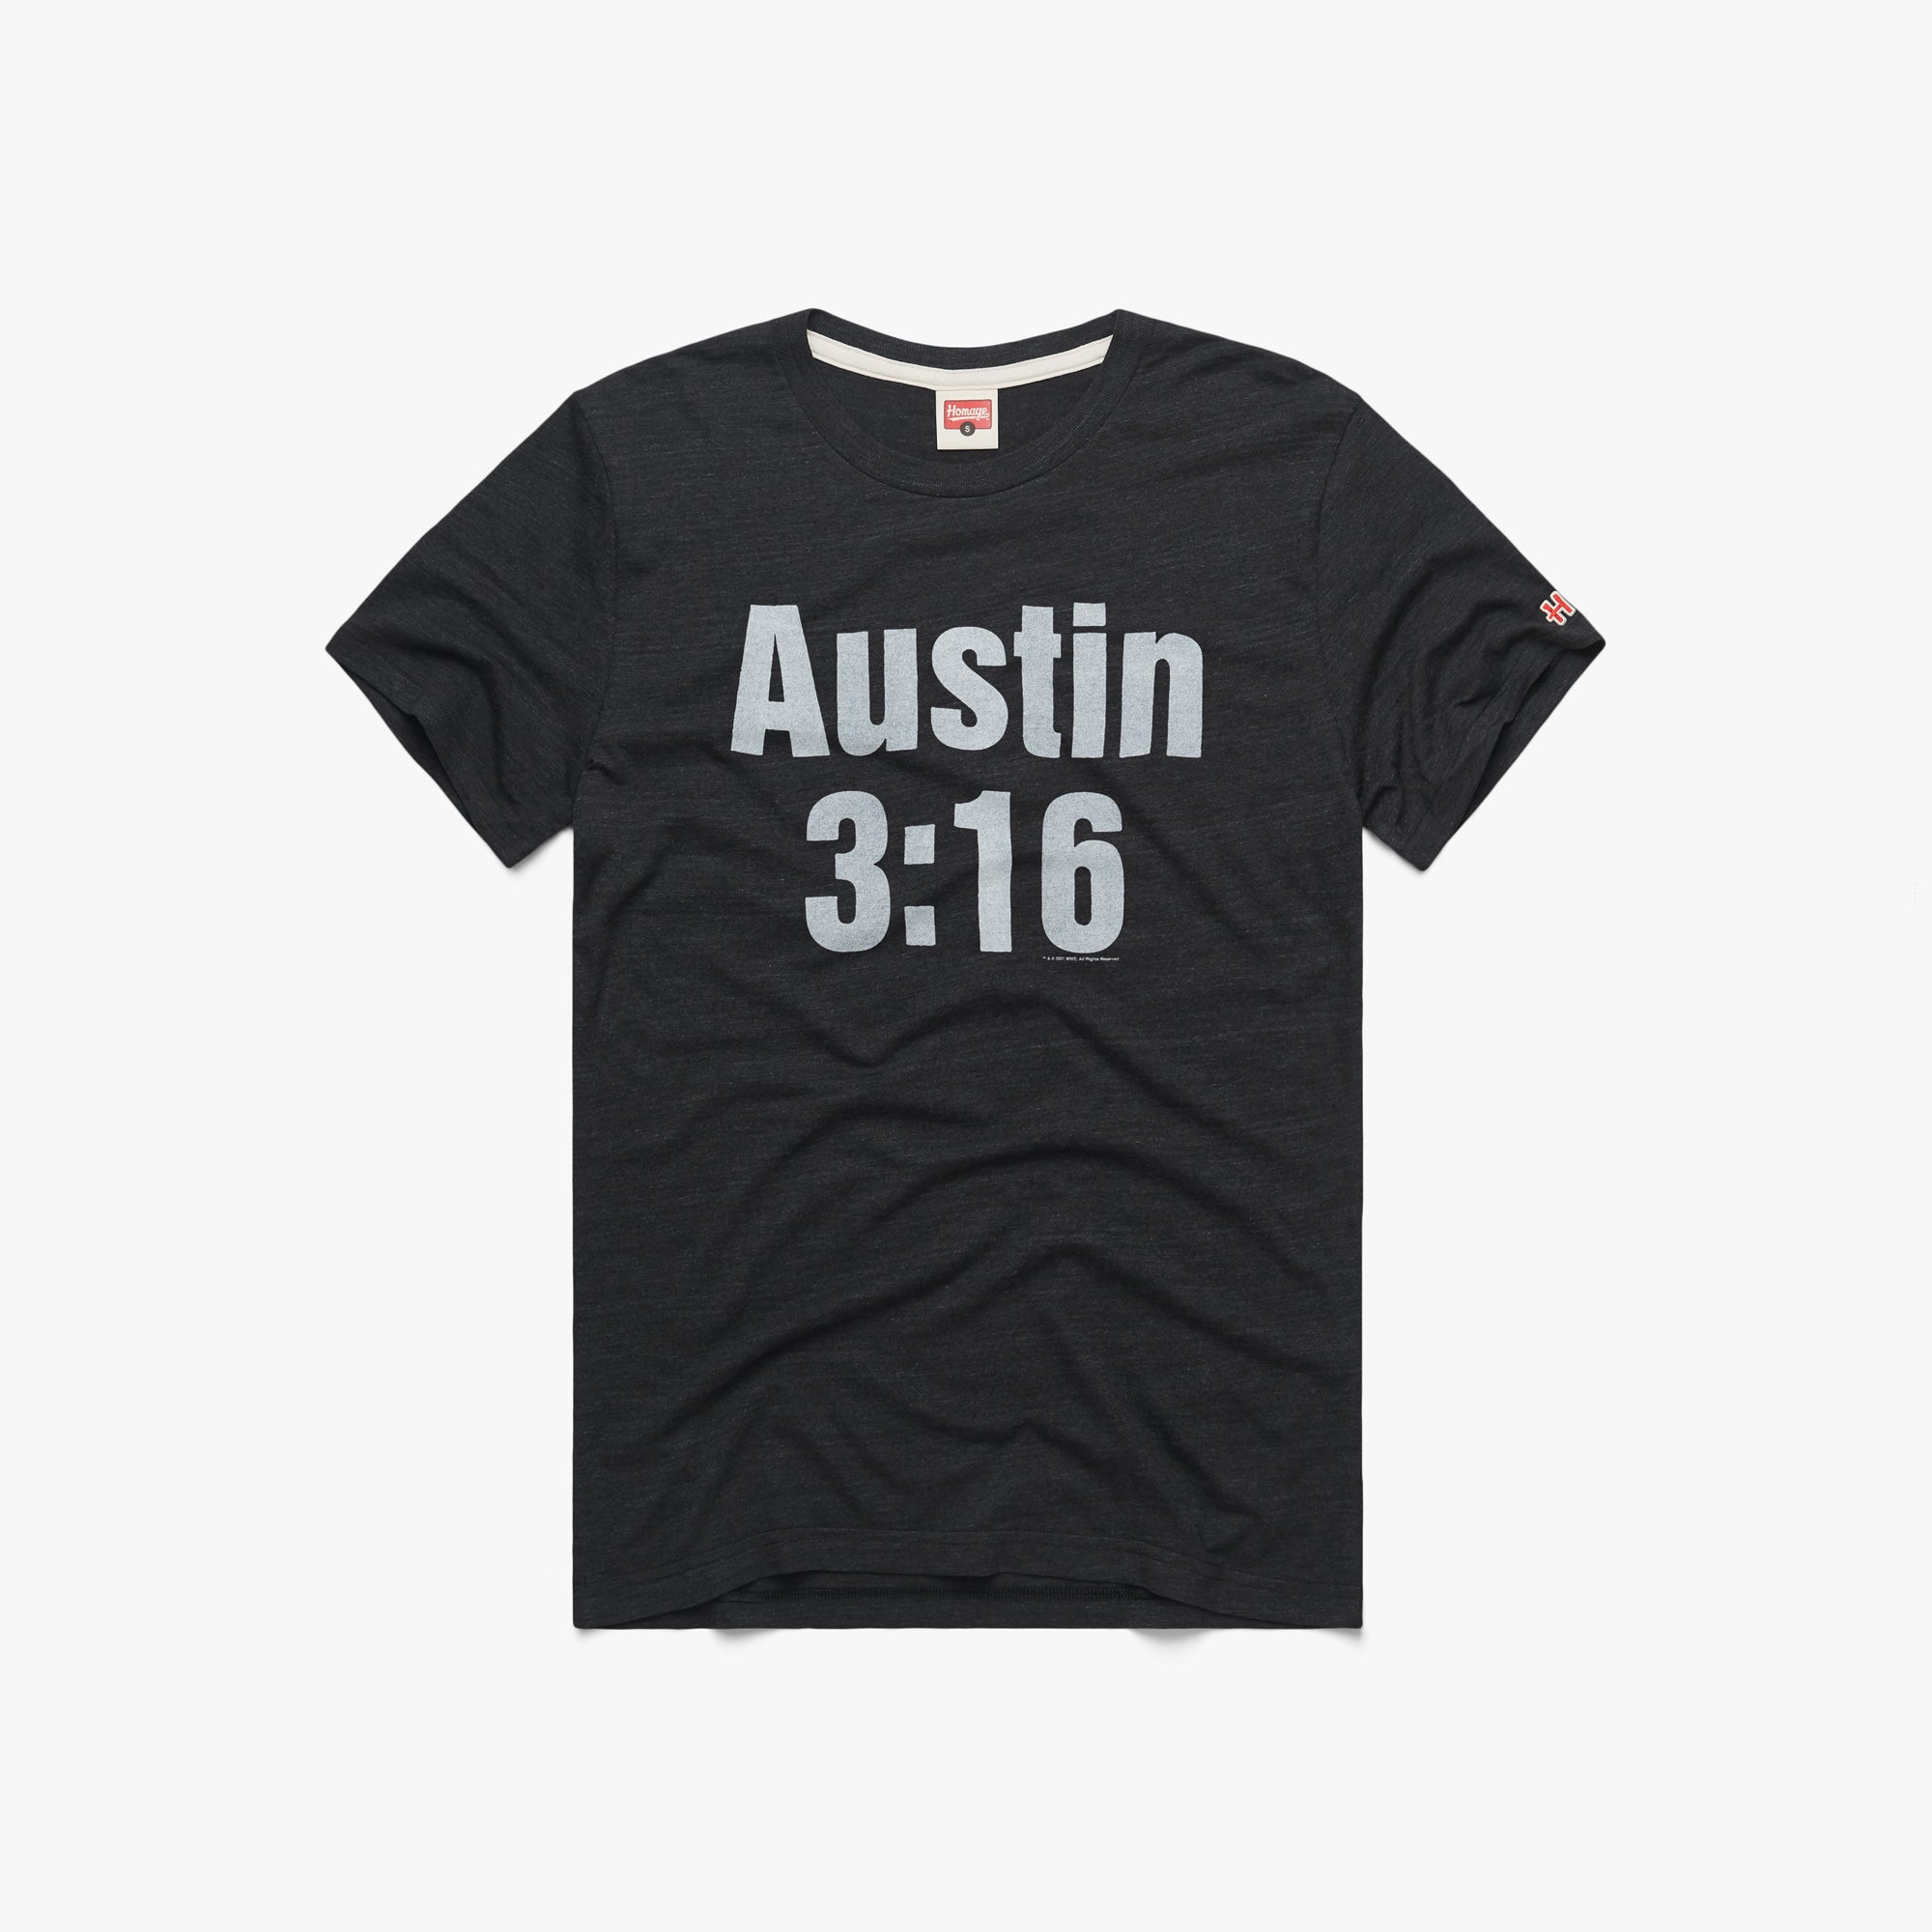 Stone Cold Steve Austin Atlanta Braves Fanatics Branded 3:16 T-shirt -  Shibtee Clothing